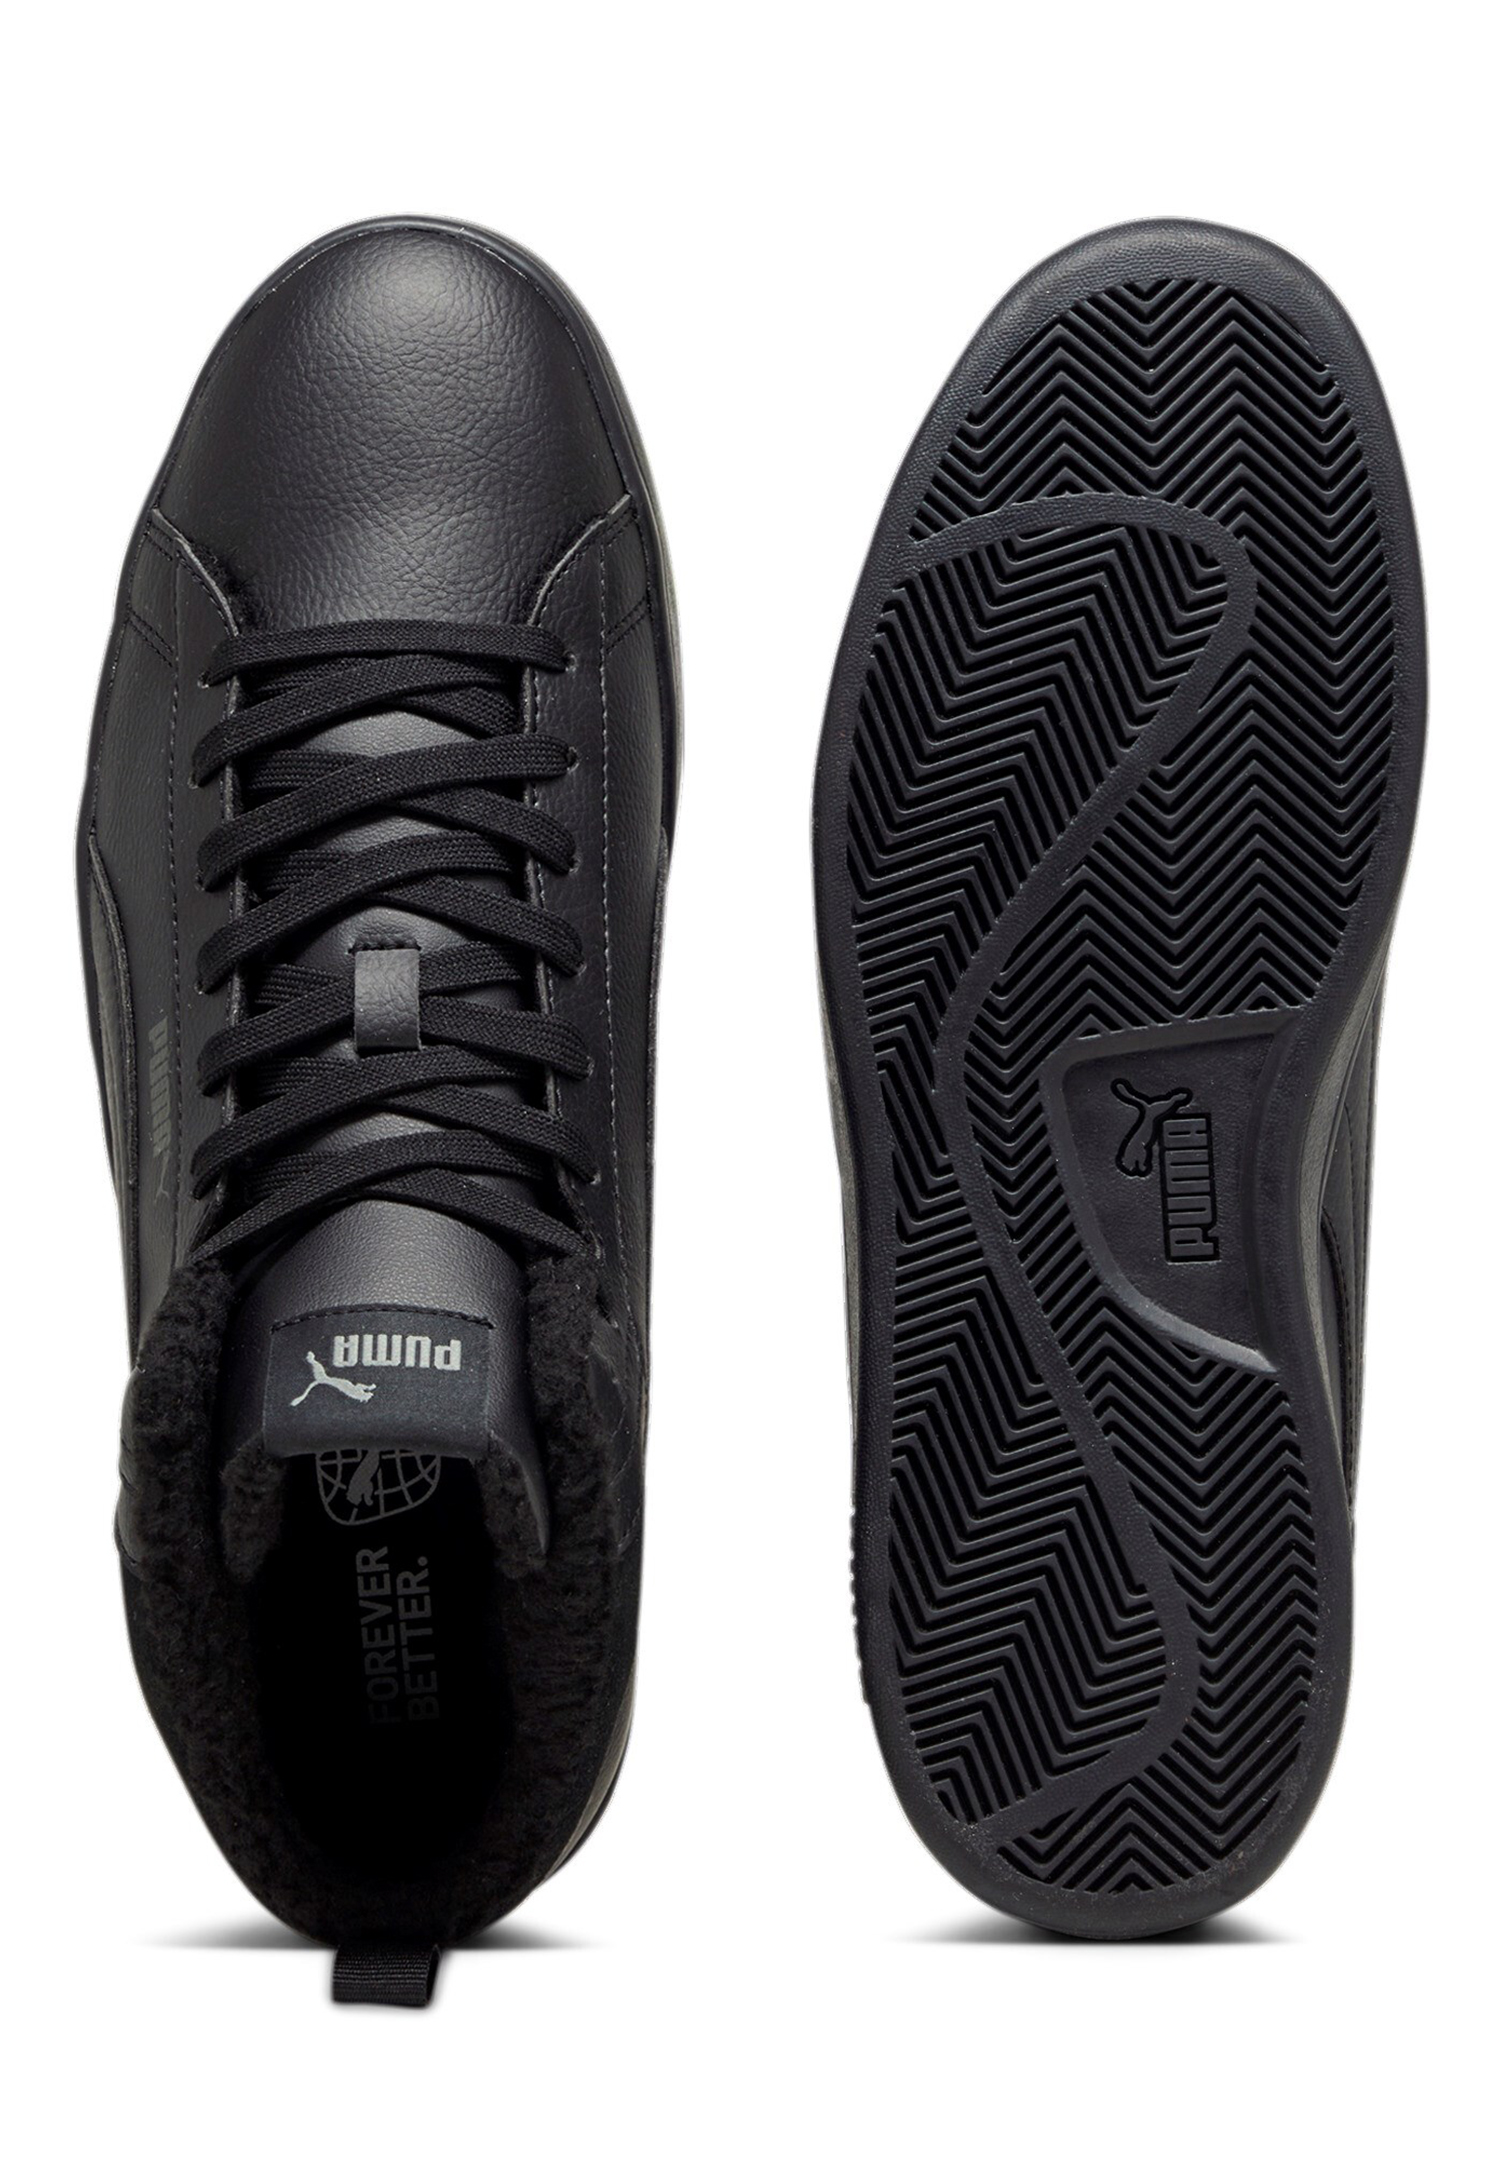 Puma SMASH 3.0 MID WTR Herren Sneaker Winterschuhe 392335 01 schwarz